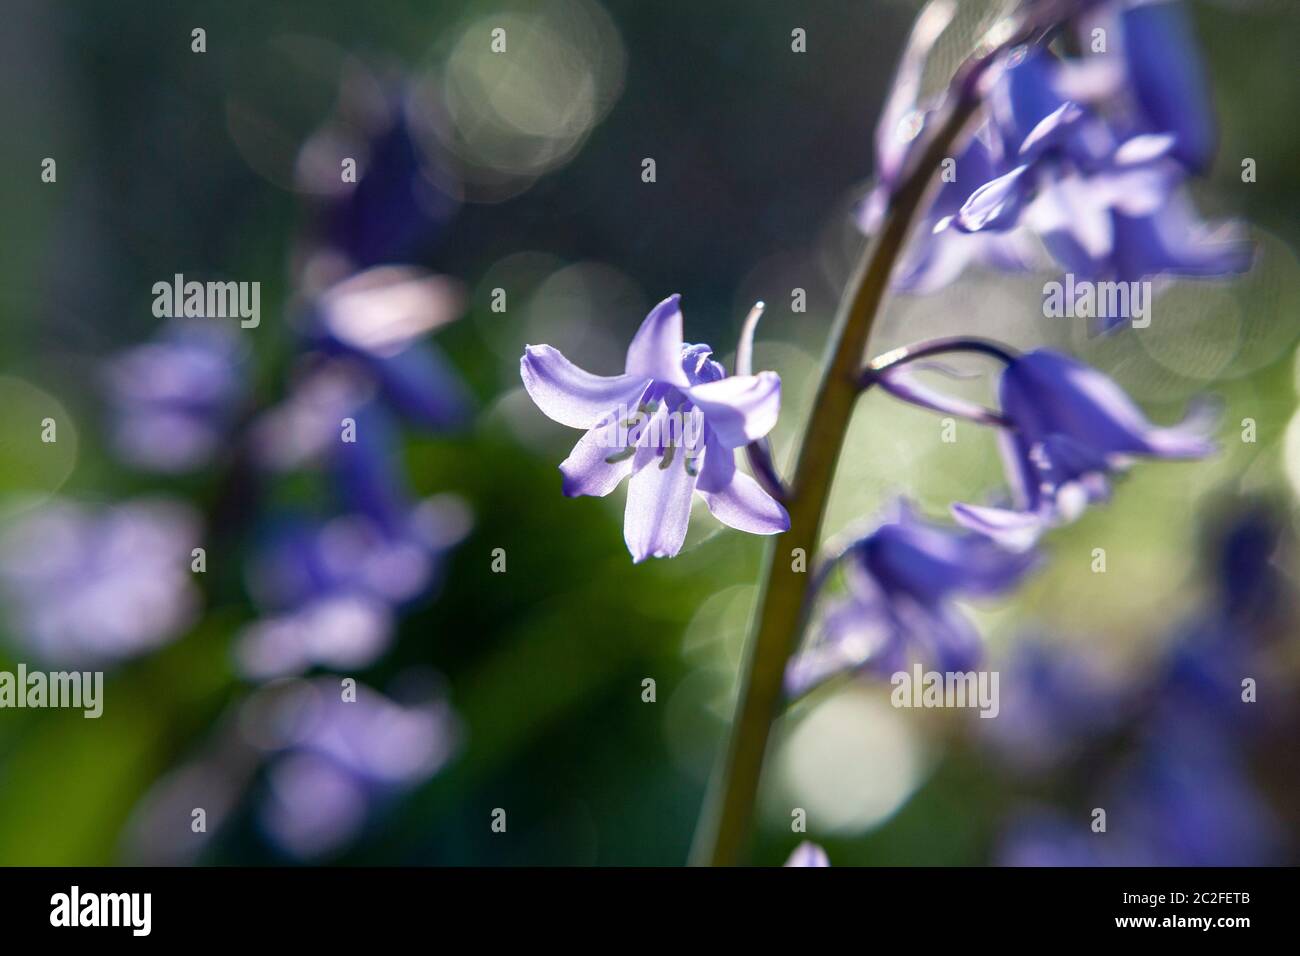 LB00202-00...WASHINGTON - LensBaby Sweet Spot 50mm image of a garden flower. Stock Photo